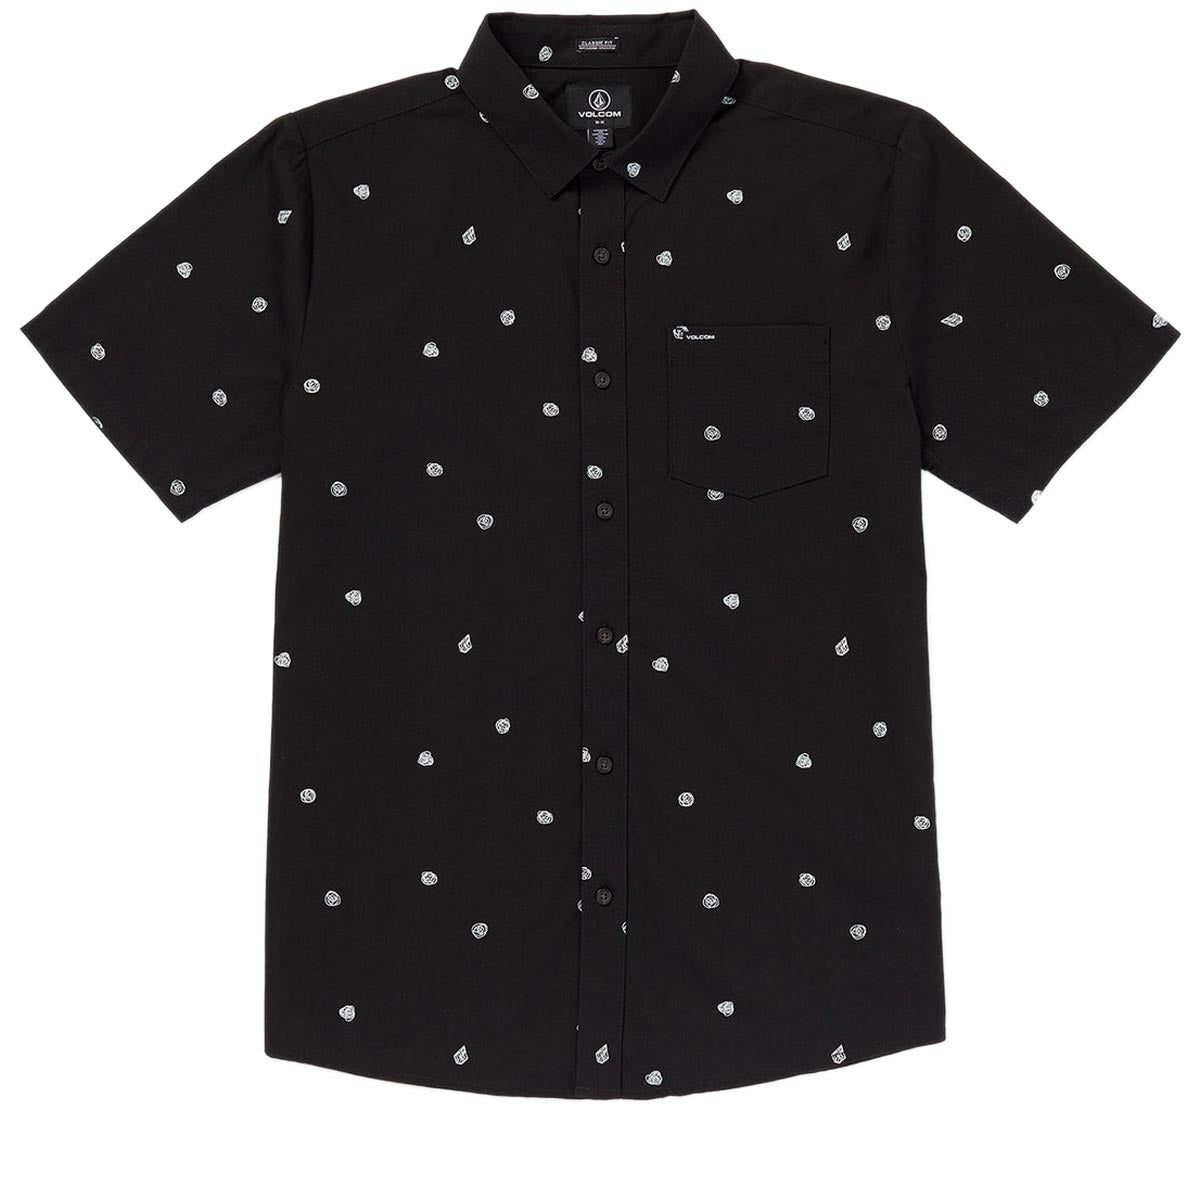 Volcom Interstone Shirt - Black image 1